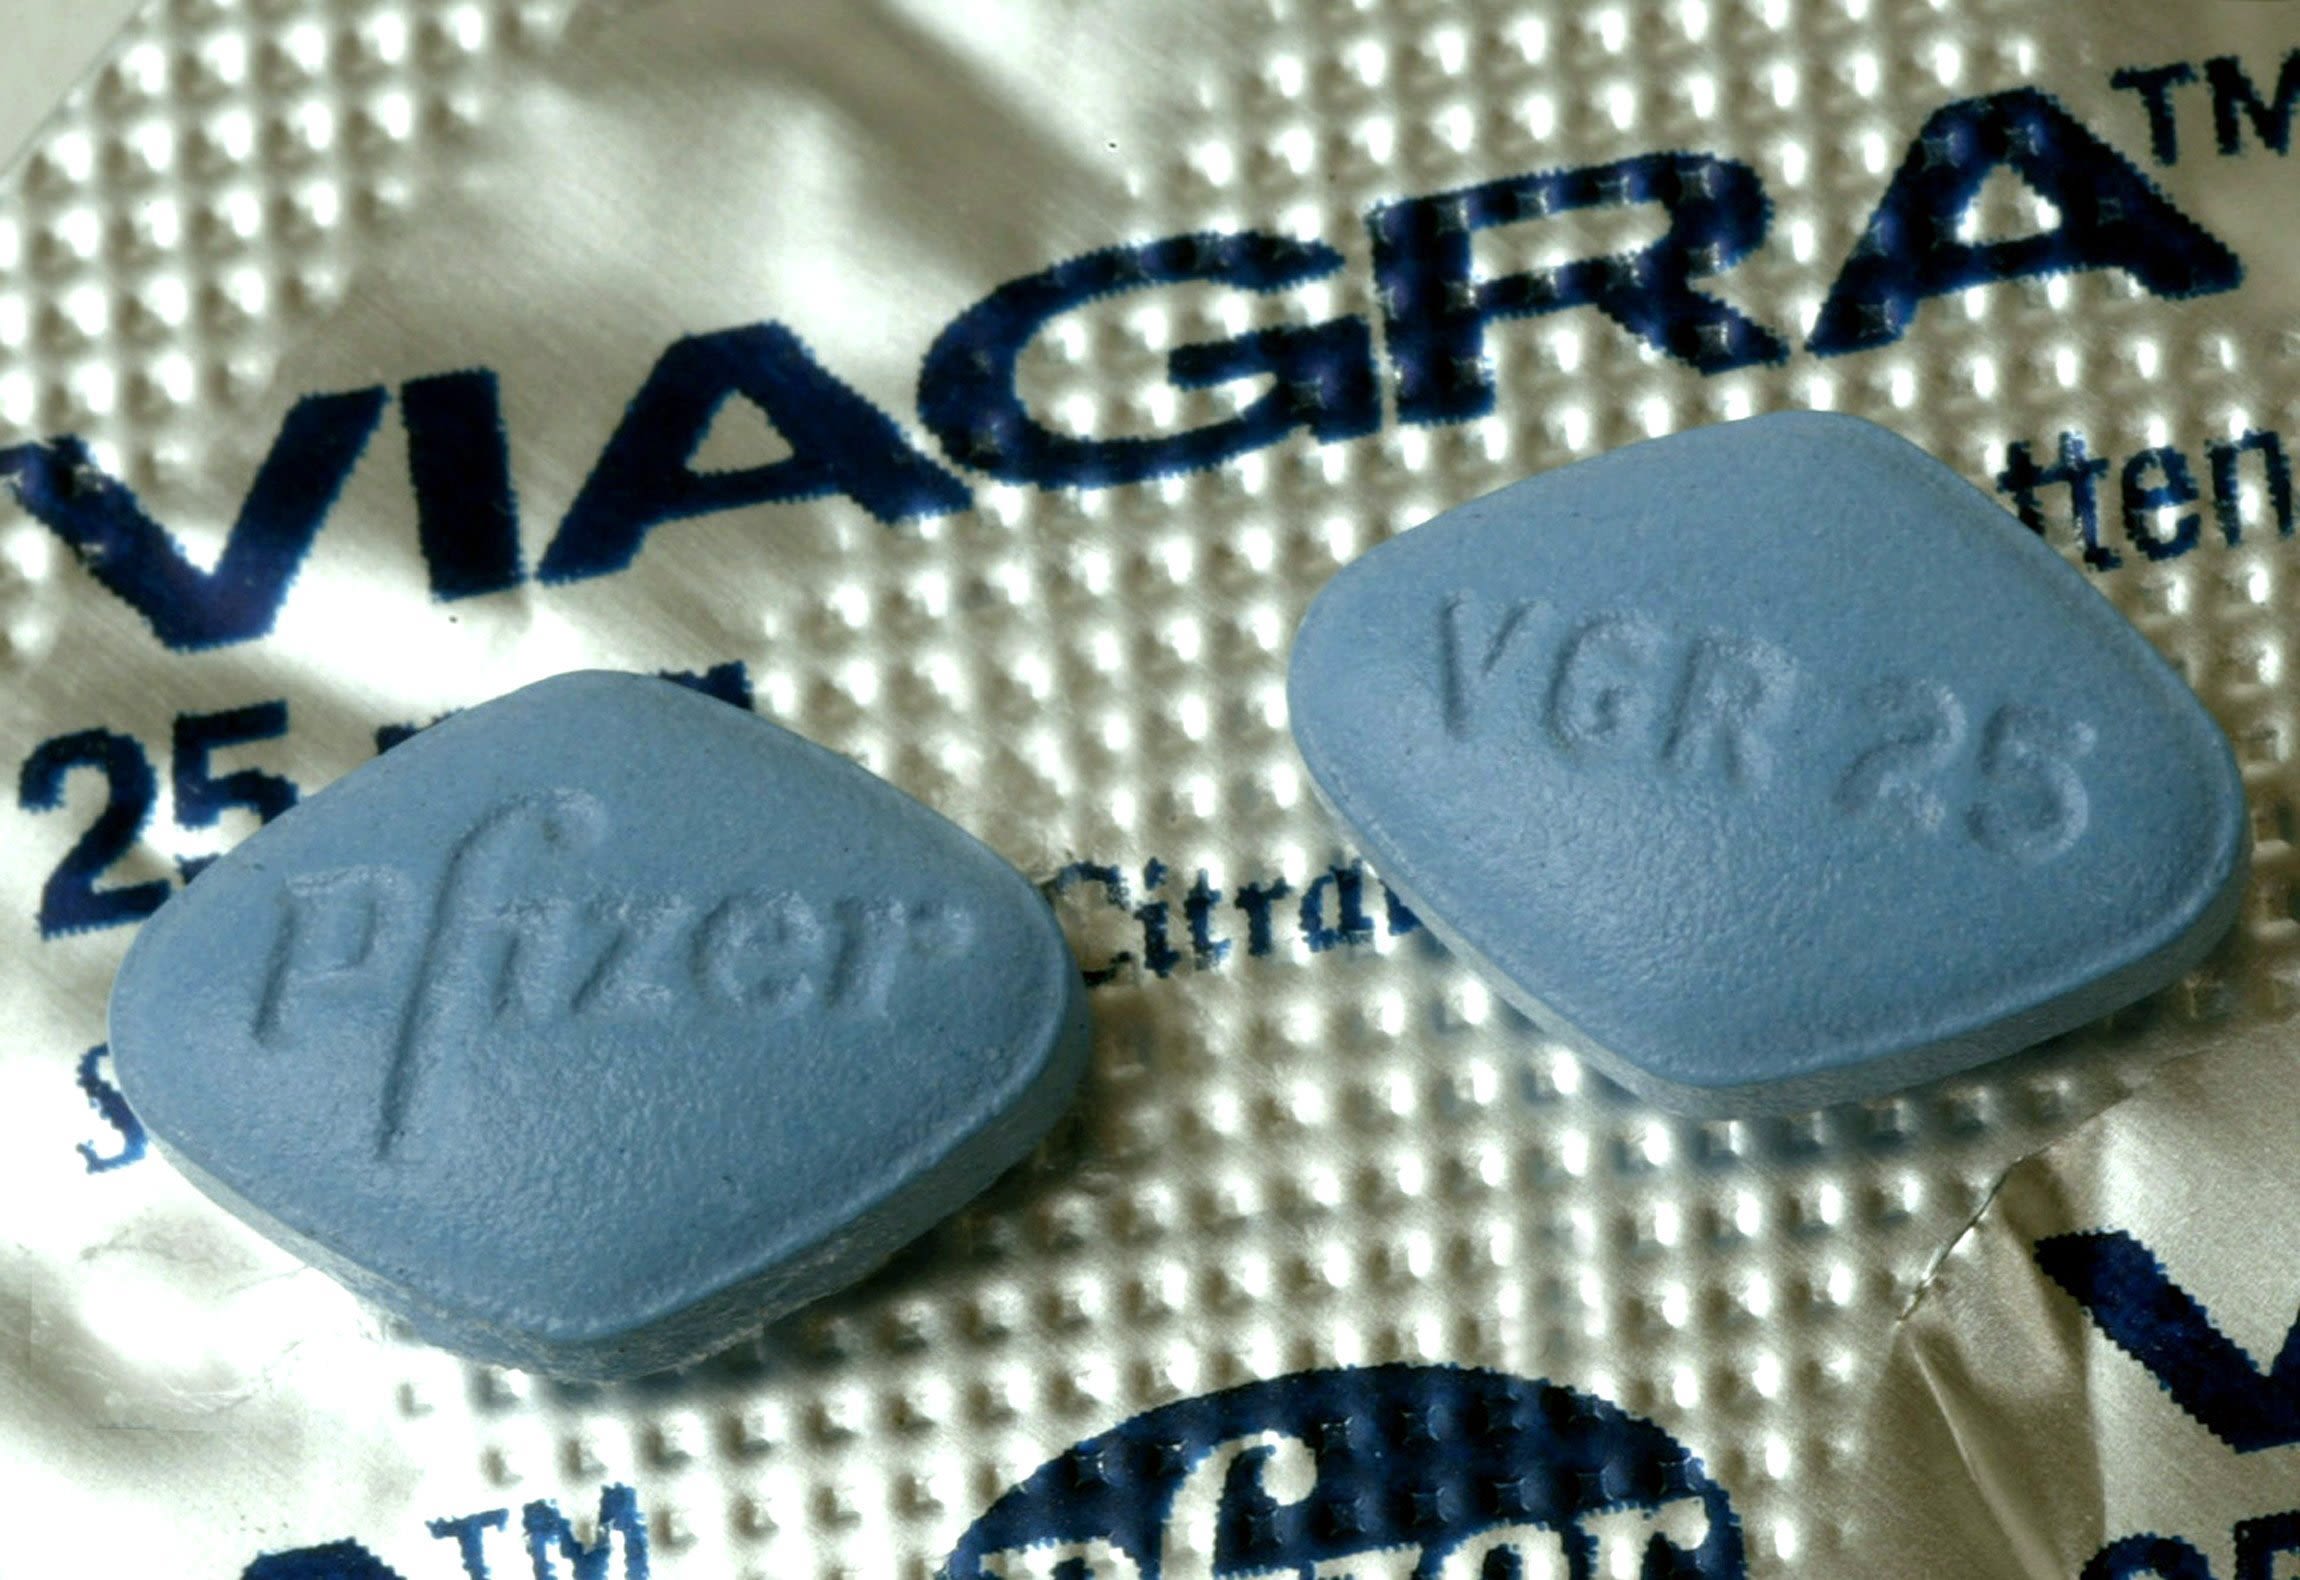 20 Years of Viagra - The Atlantic